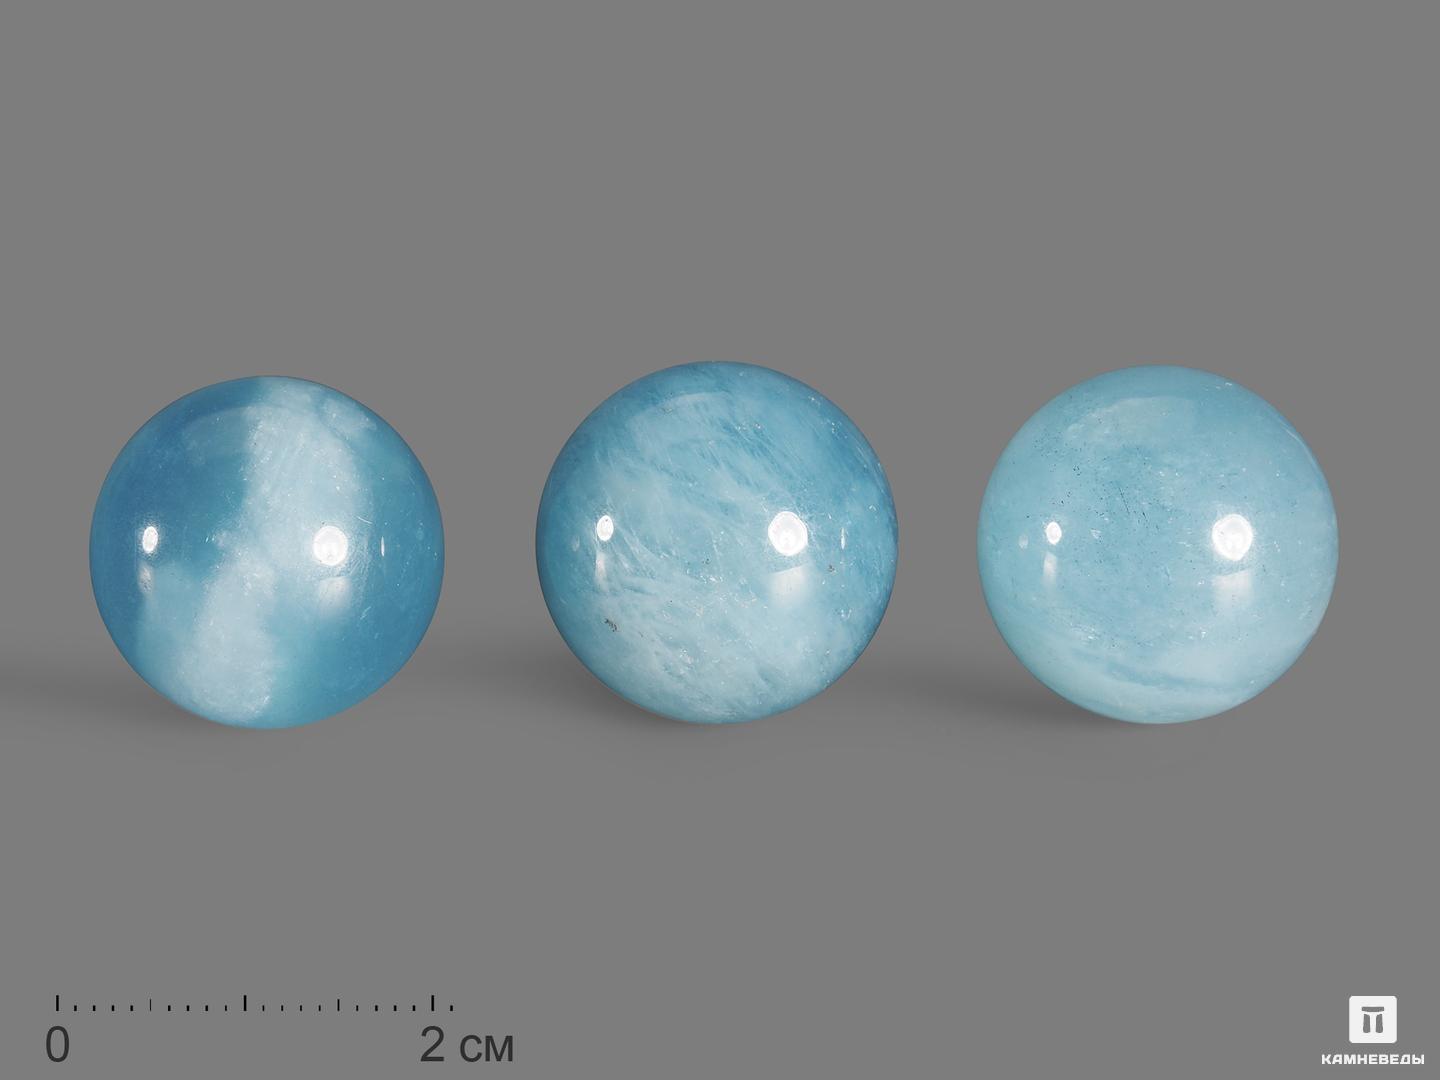 Шар из аквамарина (голубого берилла), 19-20 мм, 18816, фото 1